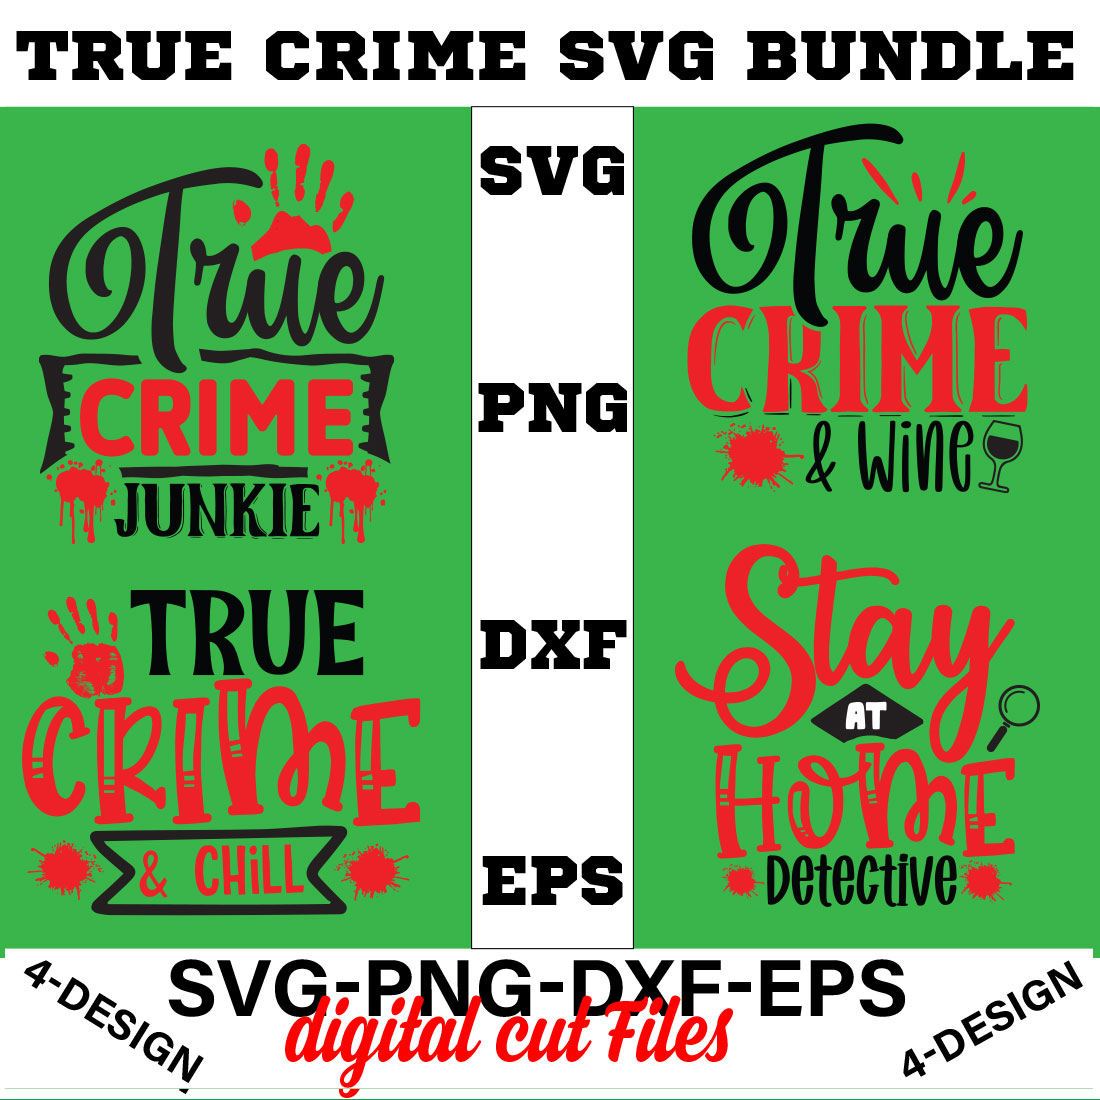 True Crime SVG Bundle Vol-02 cover image.